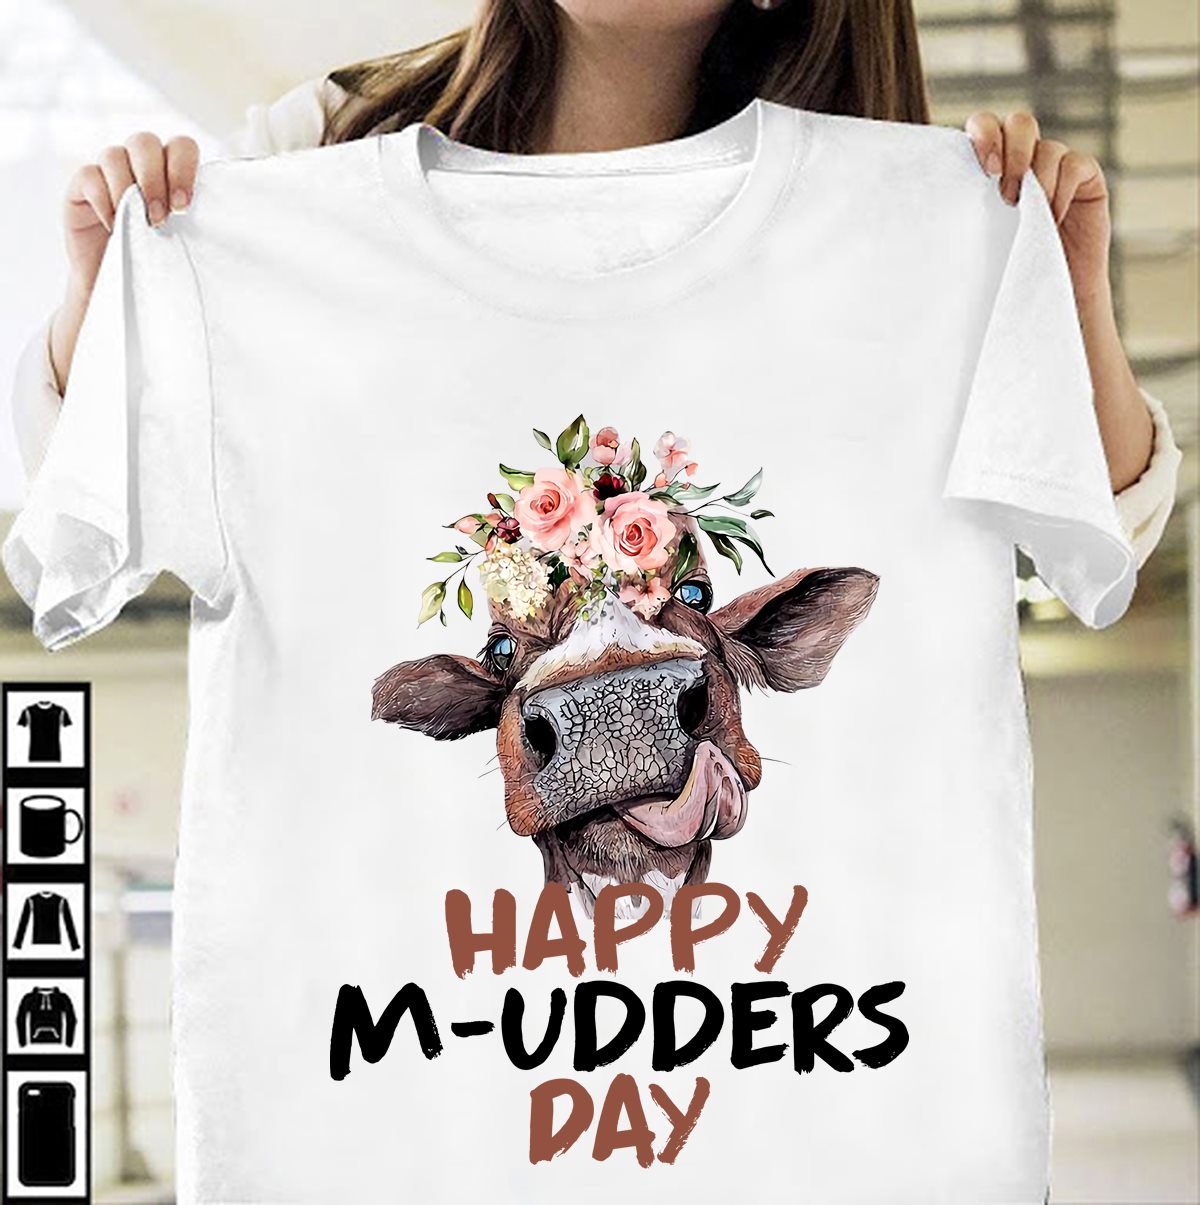 Happy mudders day - Grumpy cow